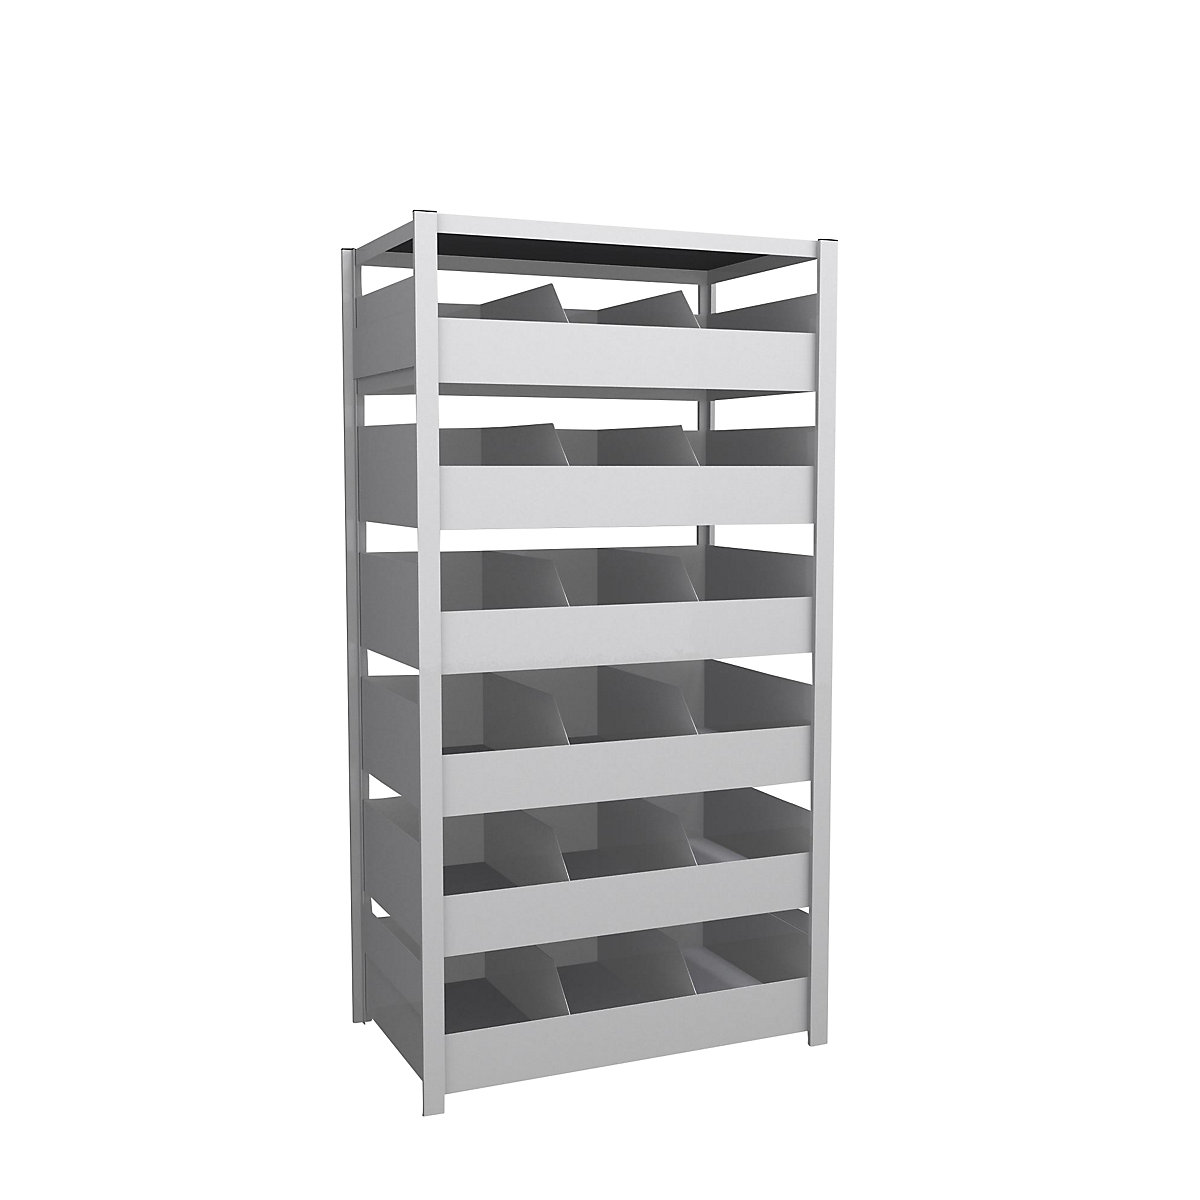 Bulk material shelving unit – hofe, shelf height 2000 mm, standard shelf unit, WxD 1060 x 635 mm